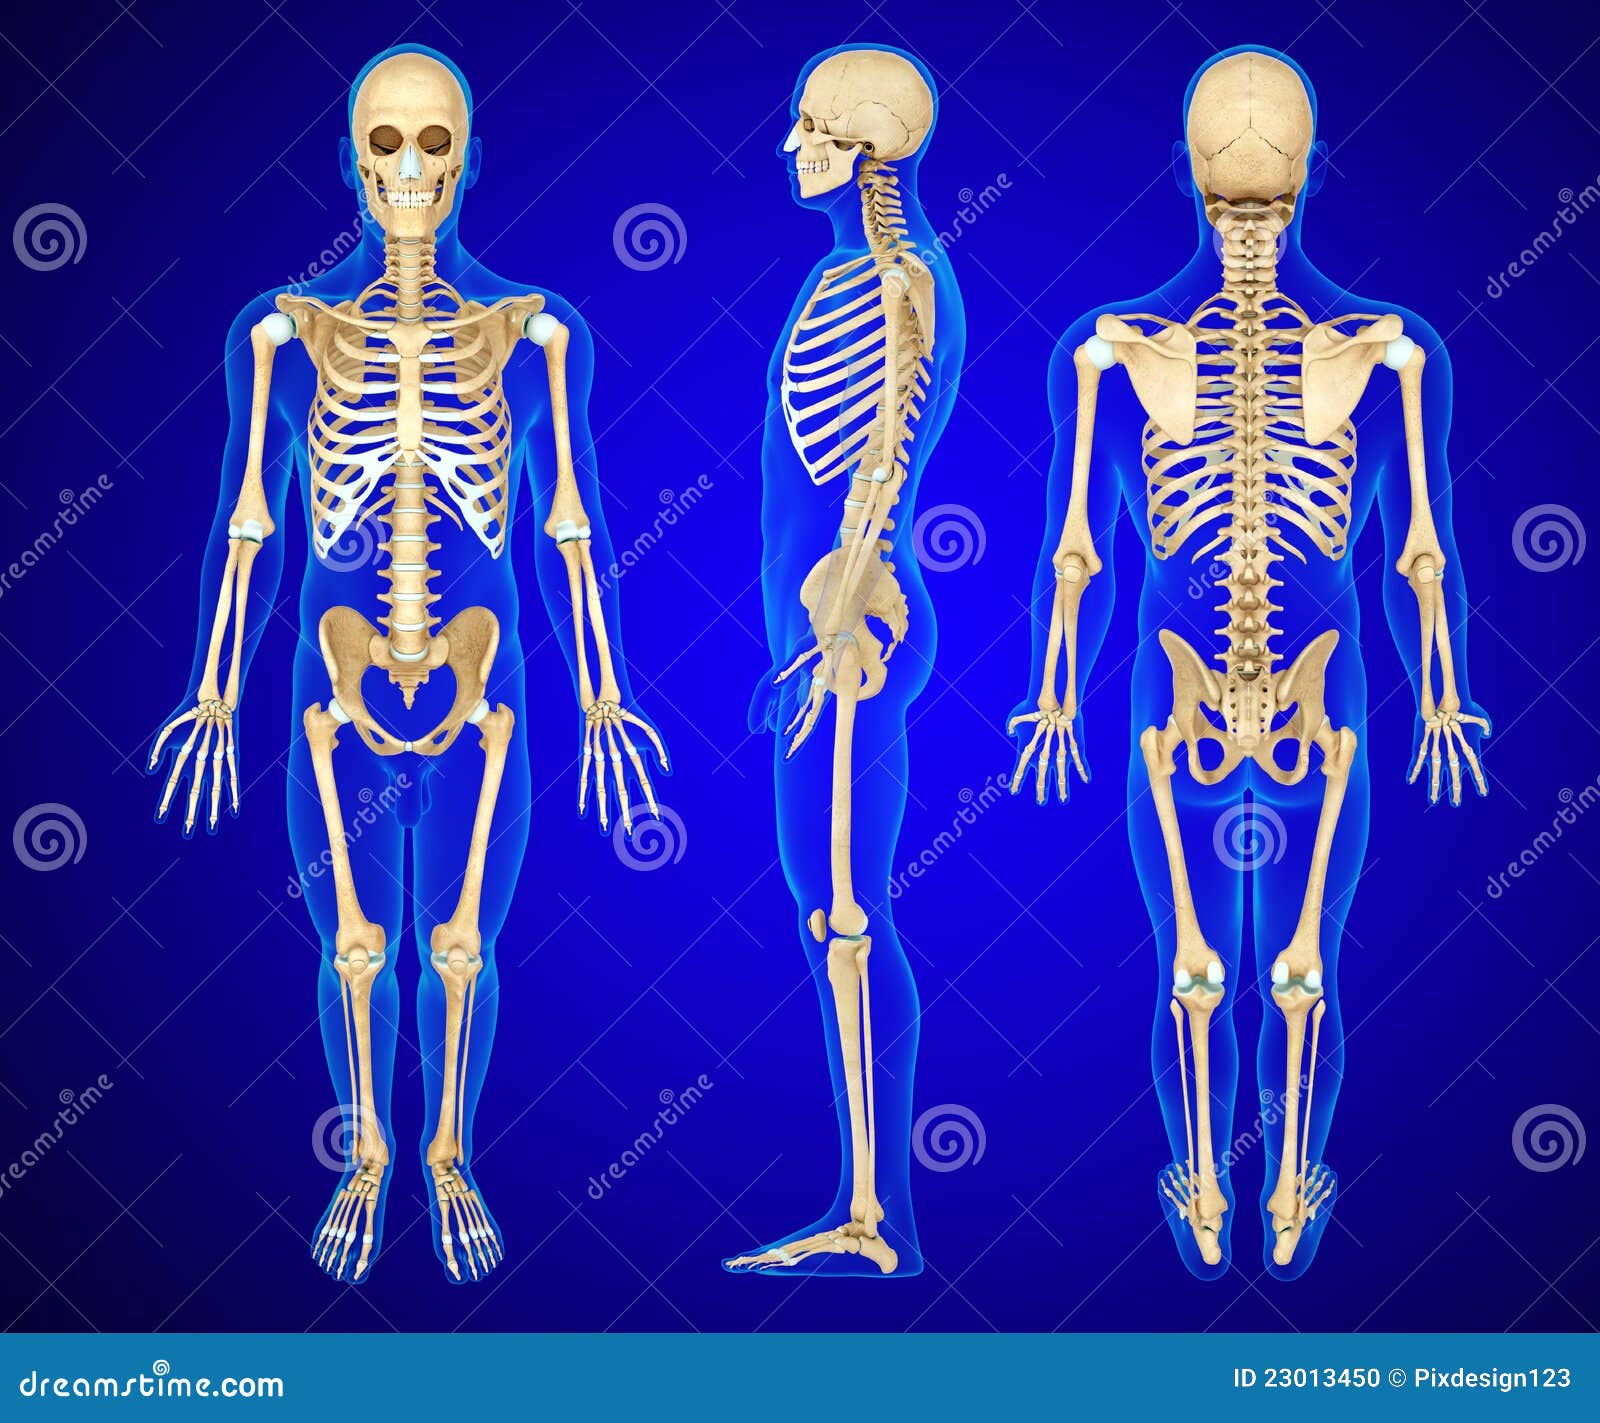 Stock Photo: Anatomy illustration of a human skeleton. Image: 23013450